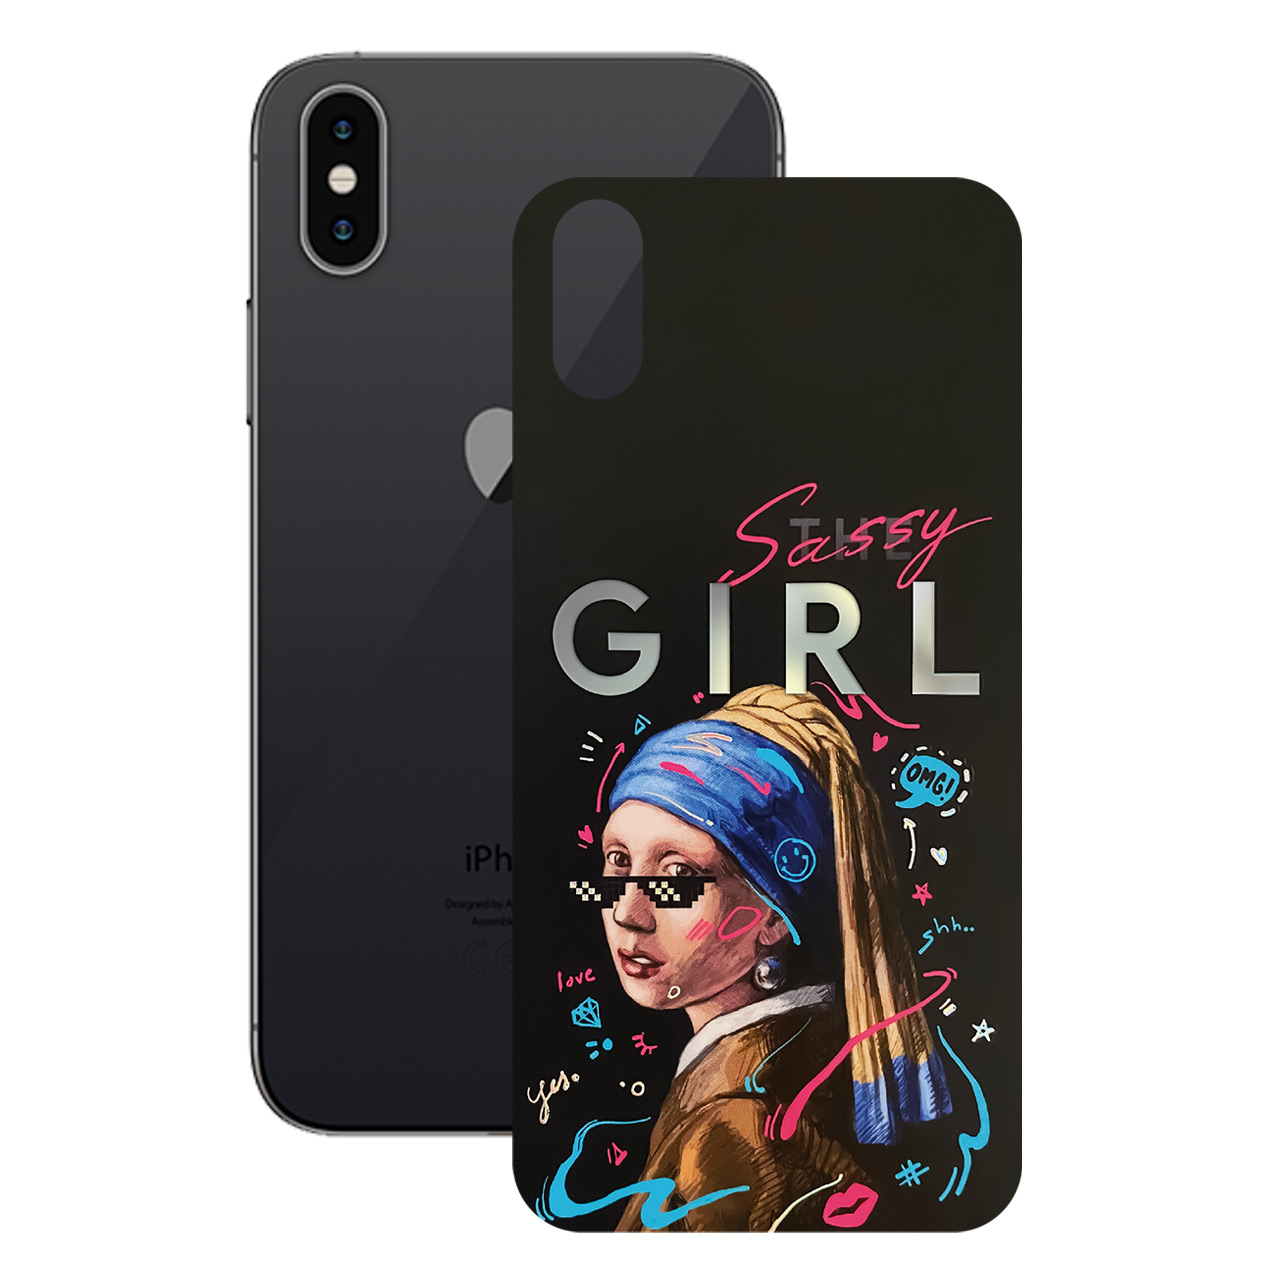 برچسب پوششی راک اسپیس طرح Girl مناسب برای گوشی موبایل اپل iPhone XS